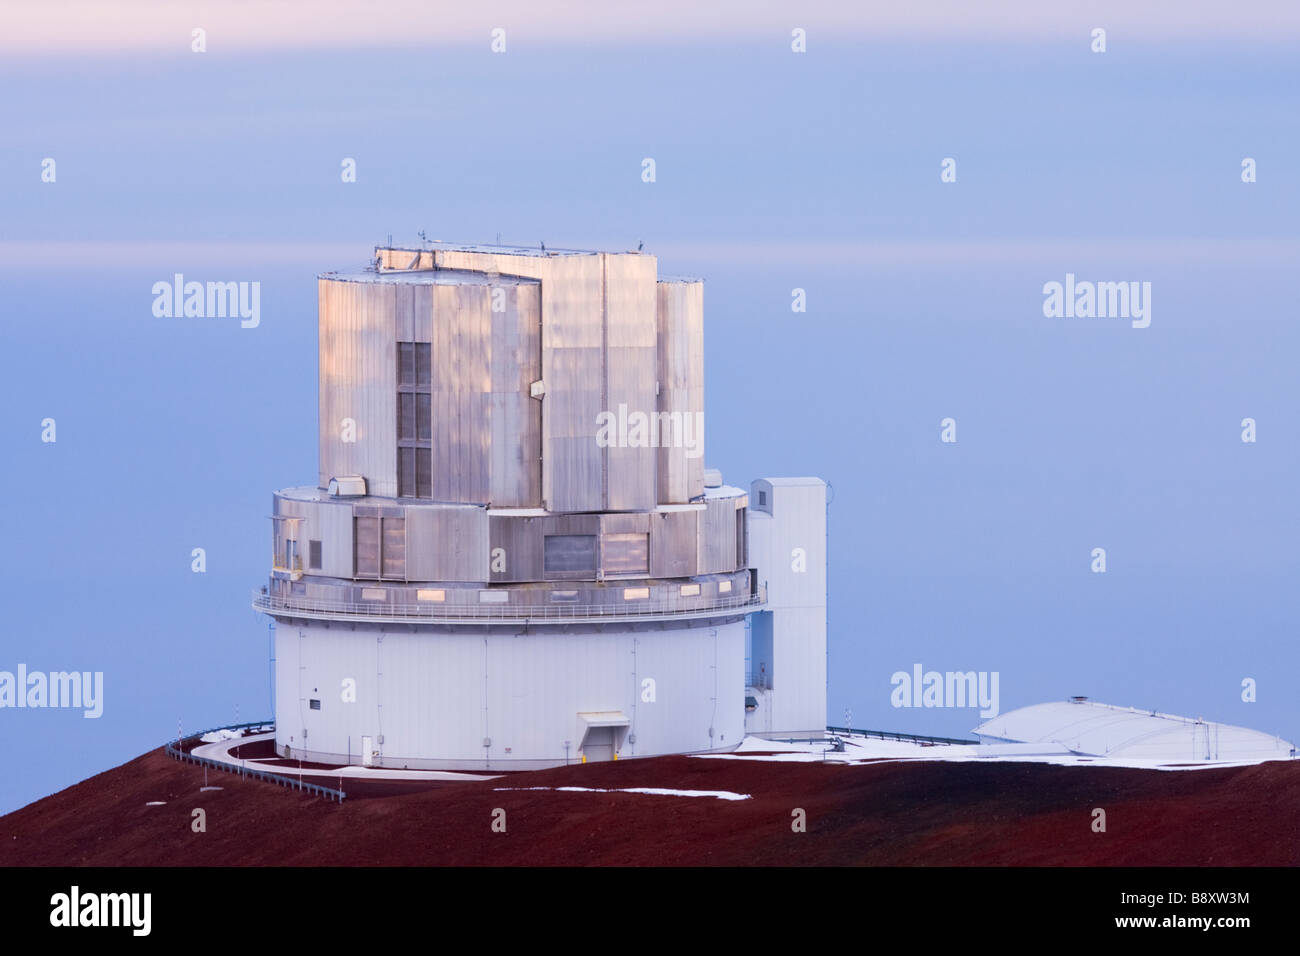 Telescopio Subaru Fotos e Imágenes de stock - Alamy